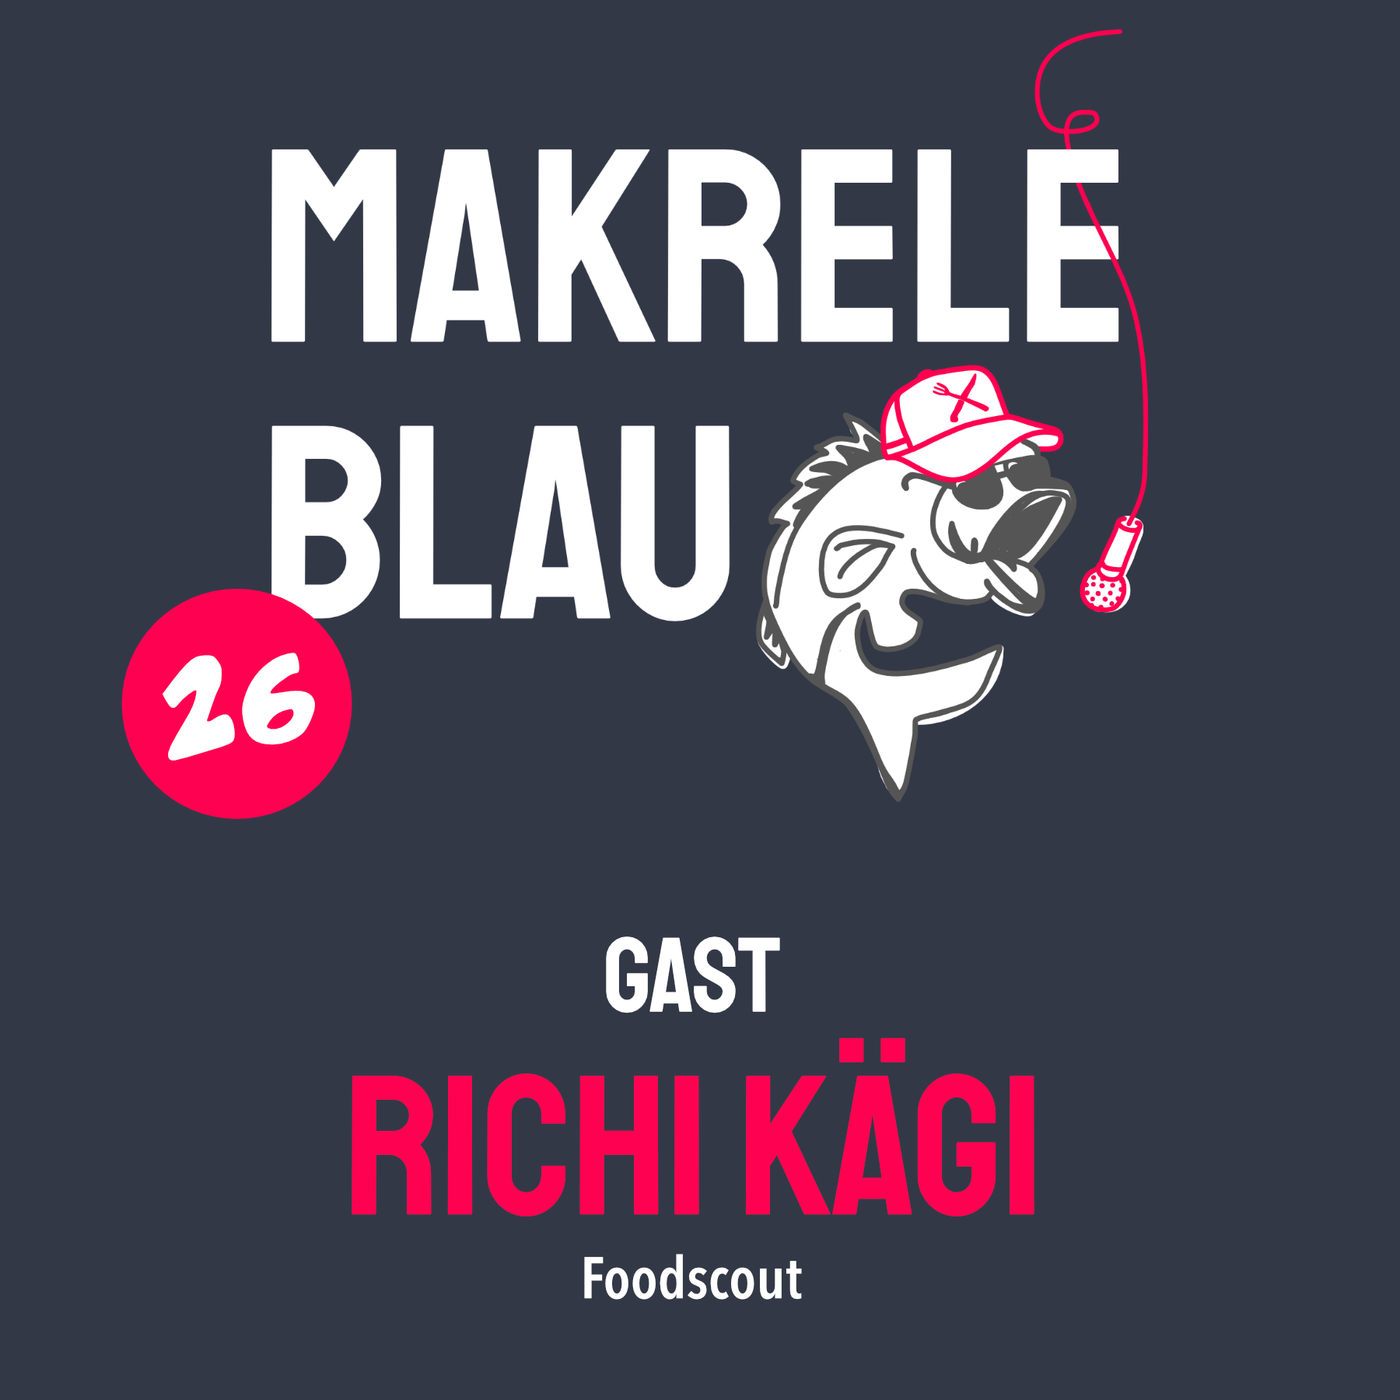 Makrele Blau #26 – Wär suächt, dä findet… mit em Richi Kägi